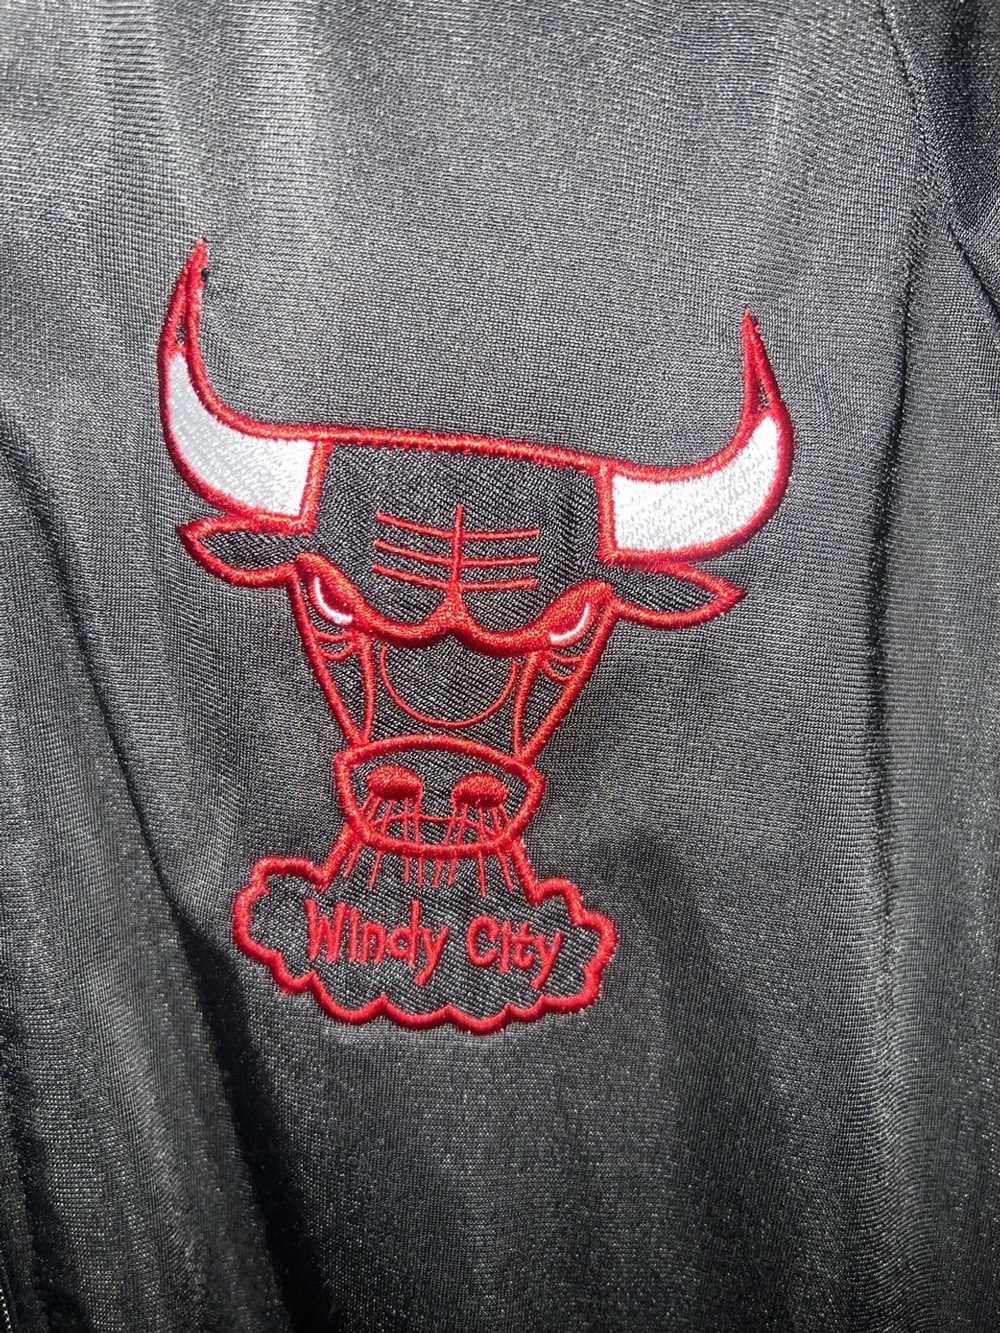 Chicago Bulls × Mitchell & Ness Bulls Jacket - image 2